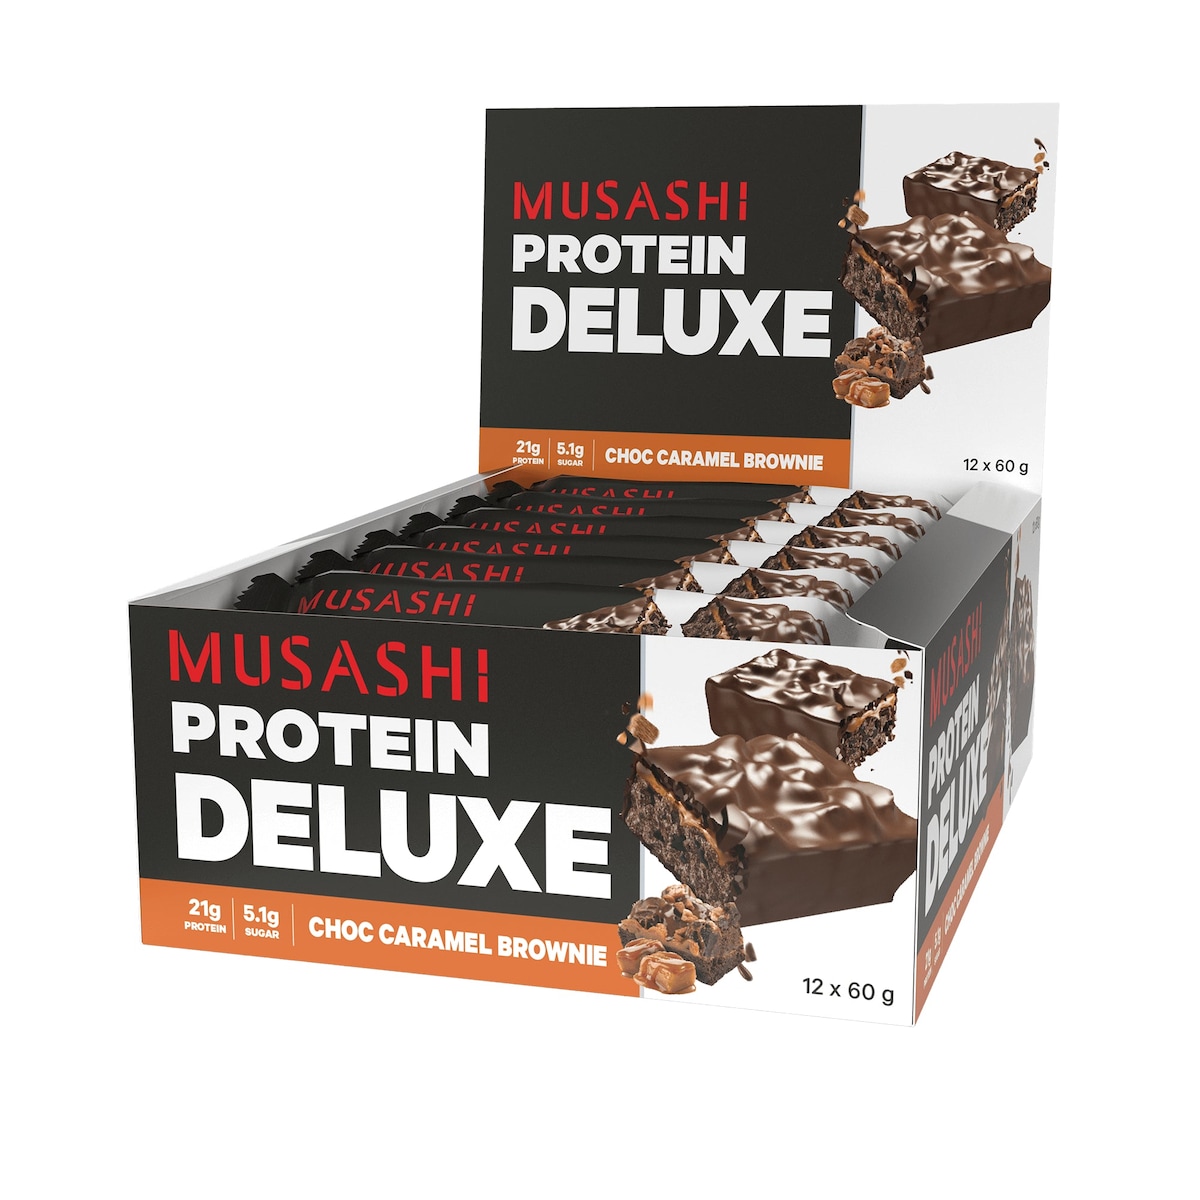 Musashi Deluxe Protein Bar Choc Caramel Brownie 12 x 60g Australia